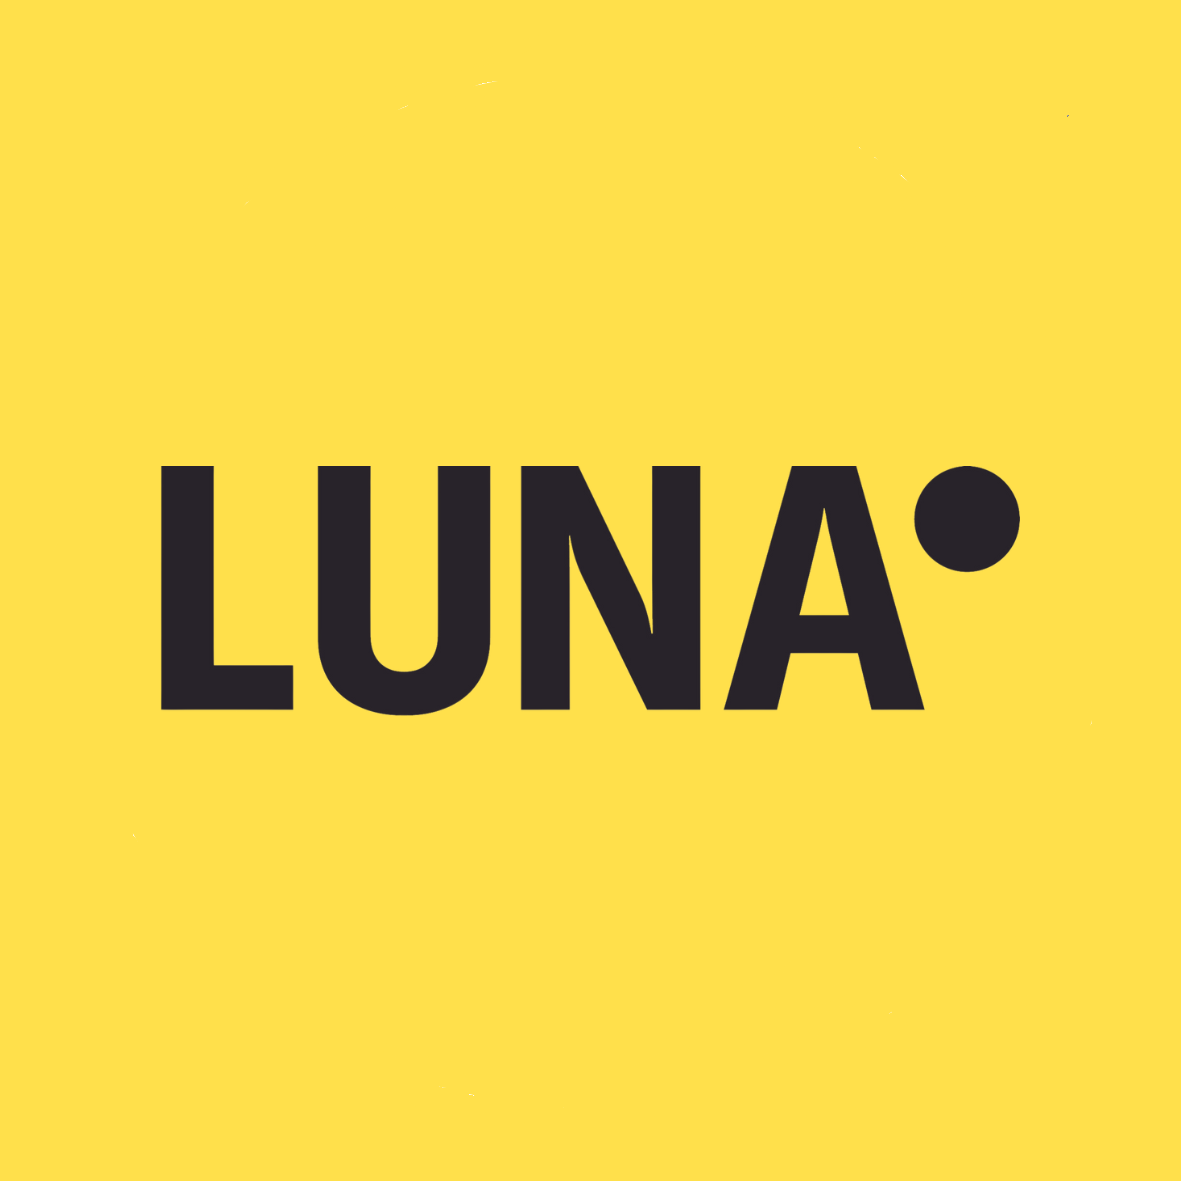 Logo for LUNA: Trapezium